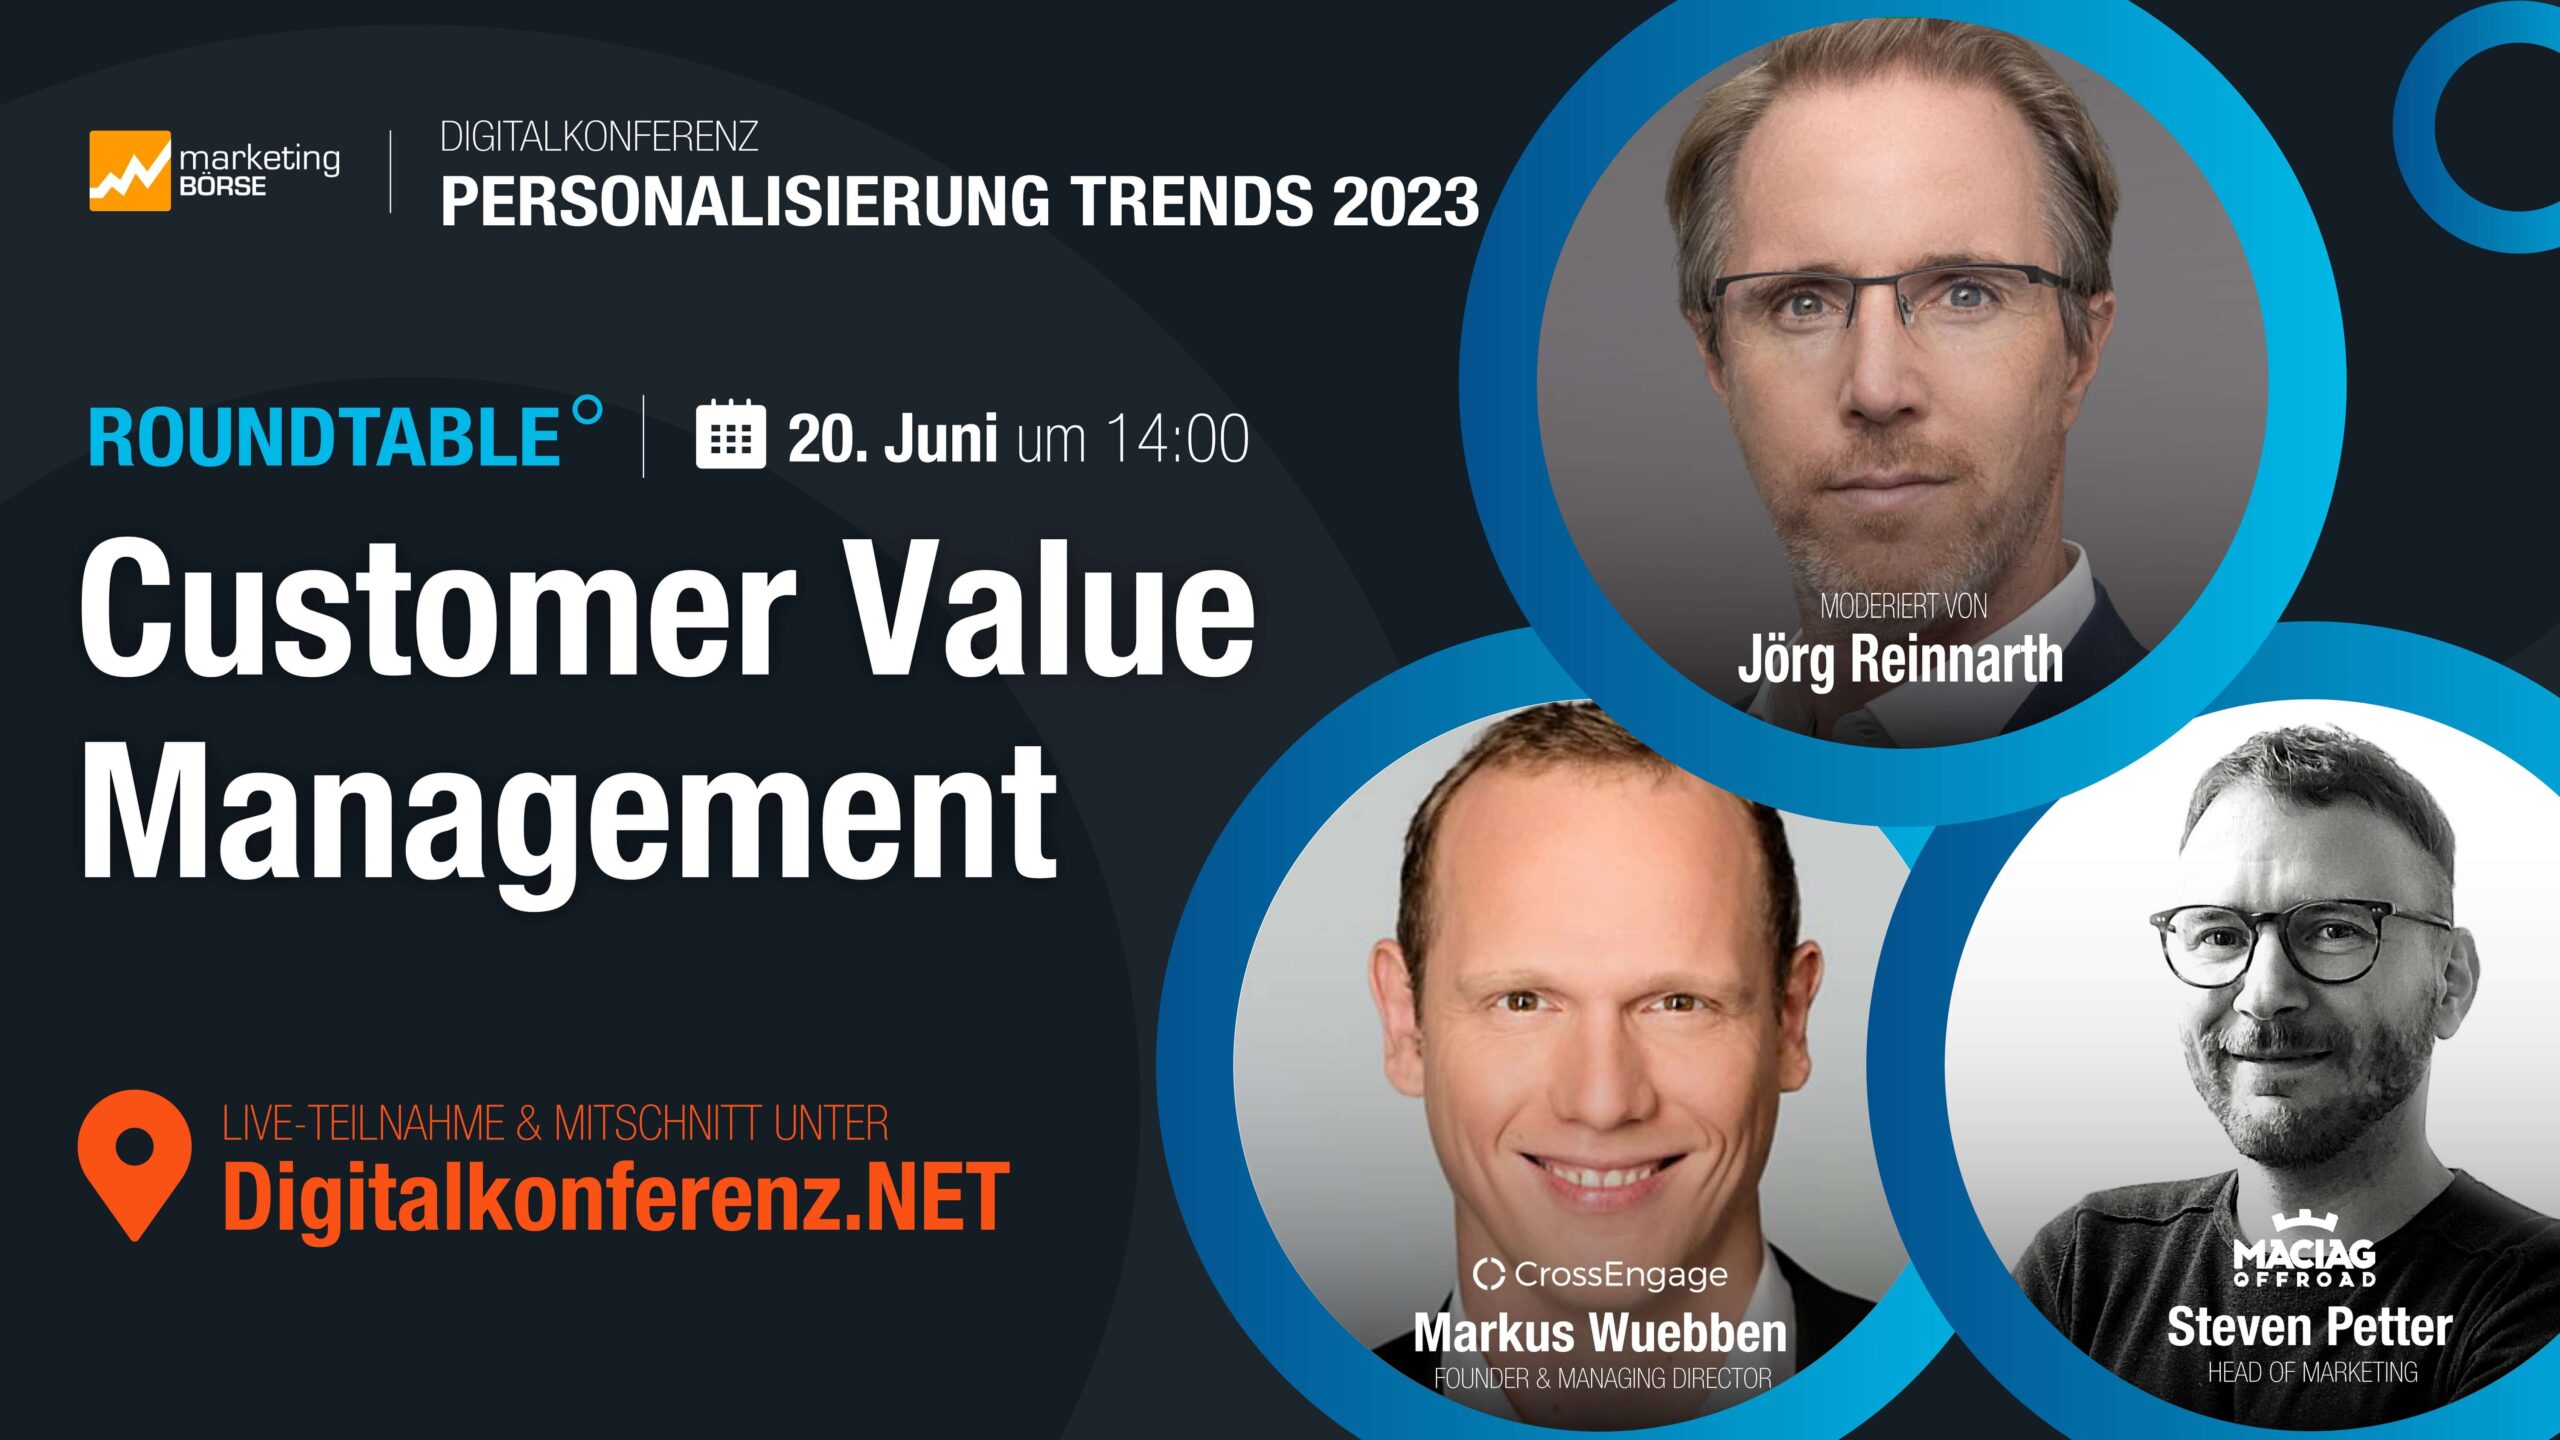 Digitalkonferenz_Personalisierung Trends 2023_Roundtable_Customer Value Management_CINTELLIC_MarketingBoerse